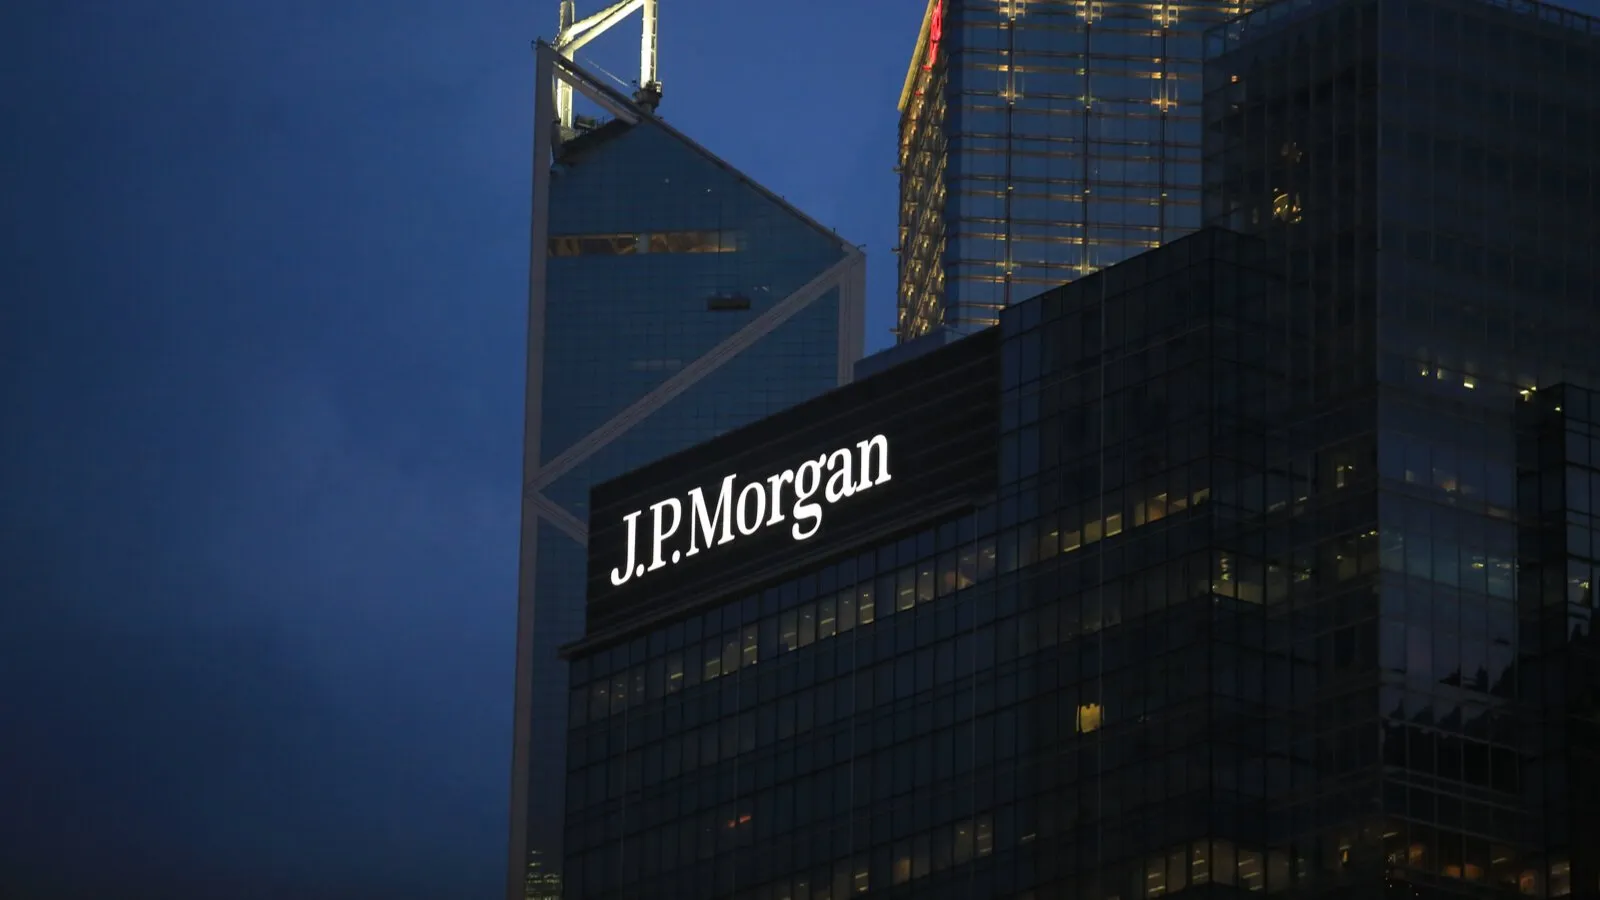 JP Morgan building in New York. Image: Shutterstock